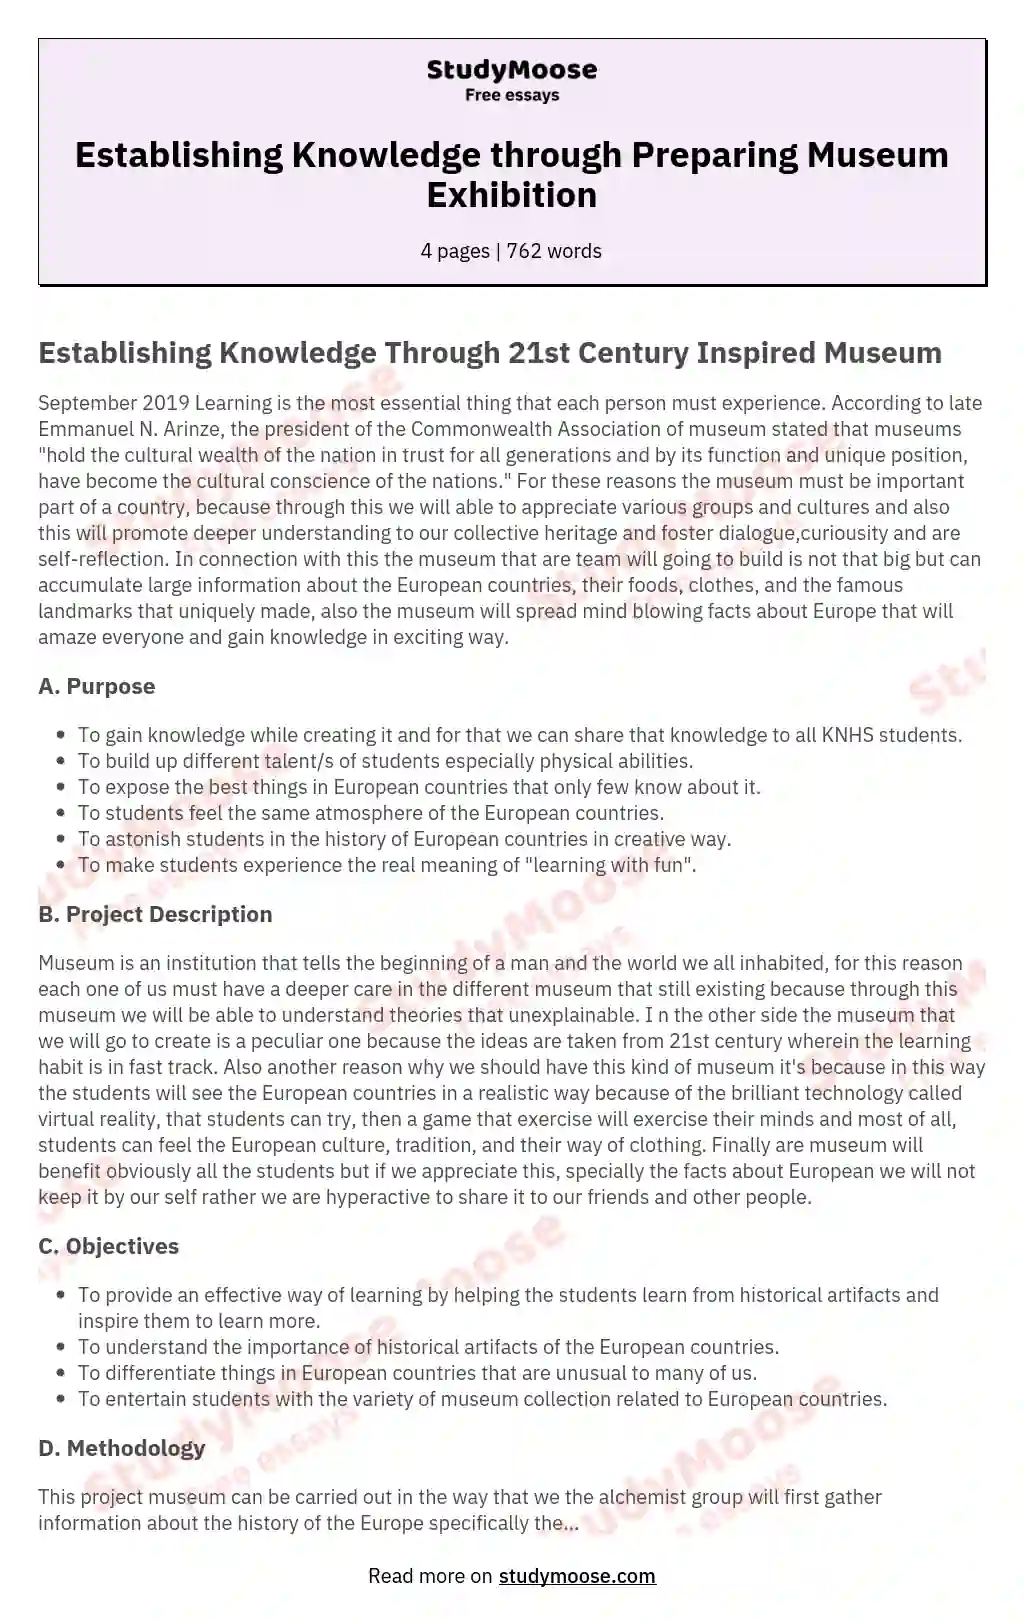 Establishing Knowledge through Preparing Museum Exhibition